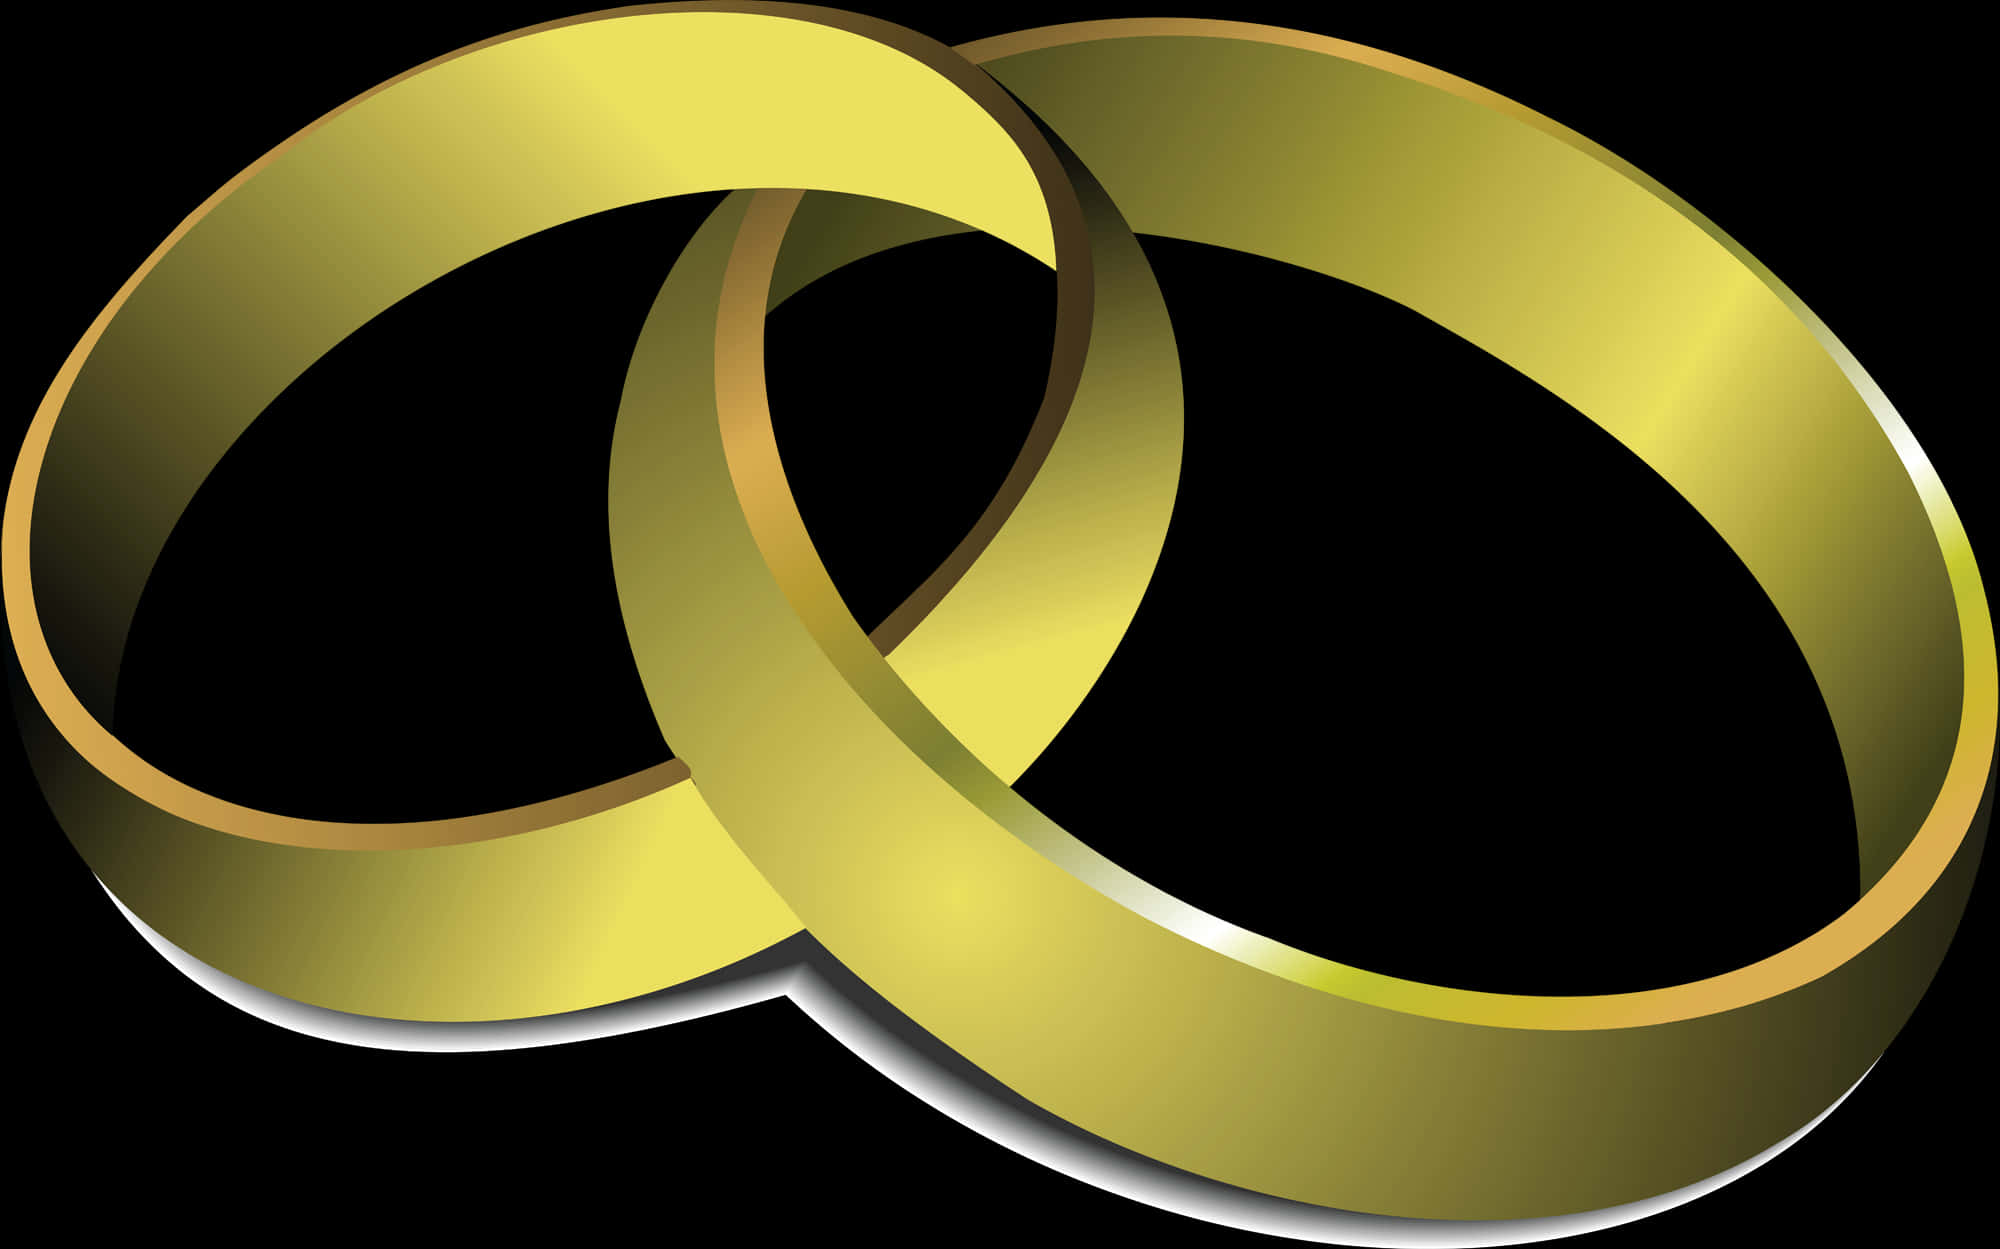 Interlocking Golden Rings Graphic PNG